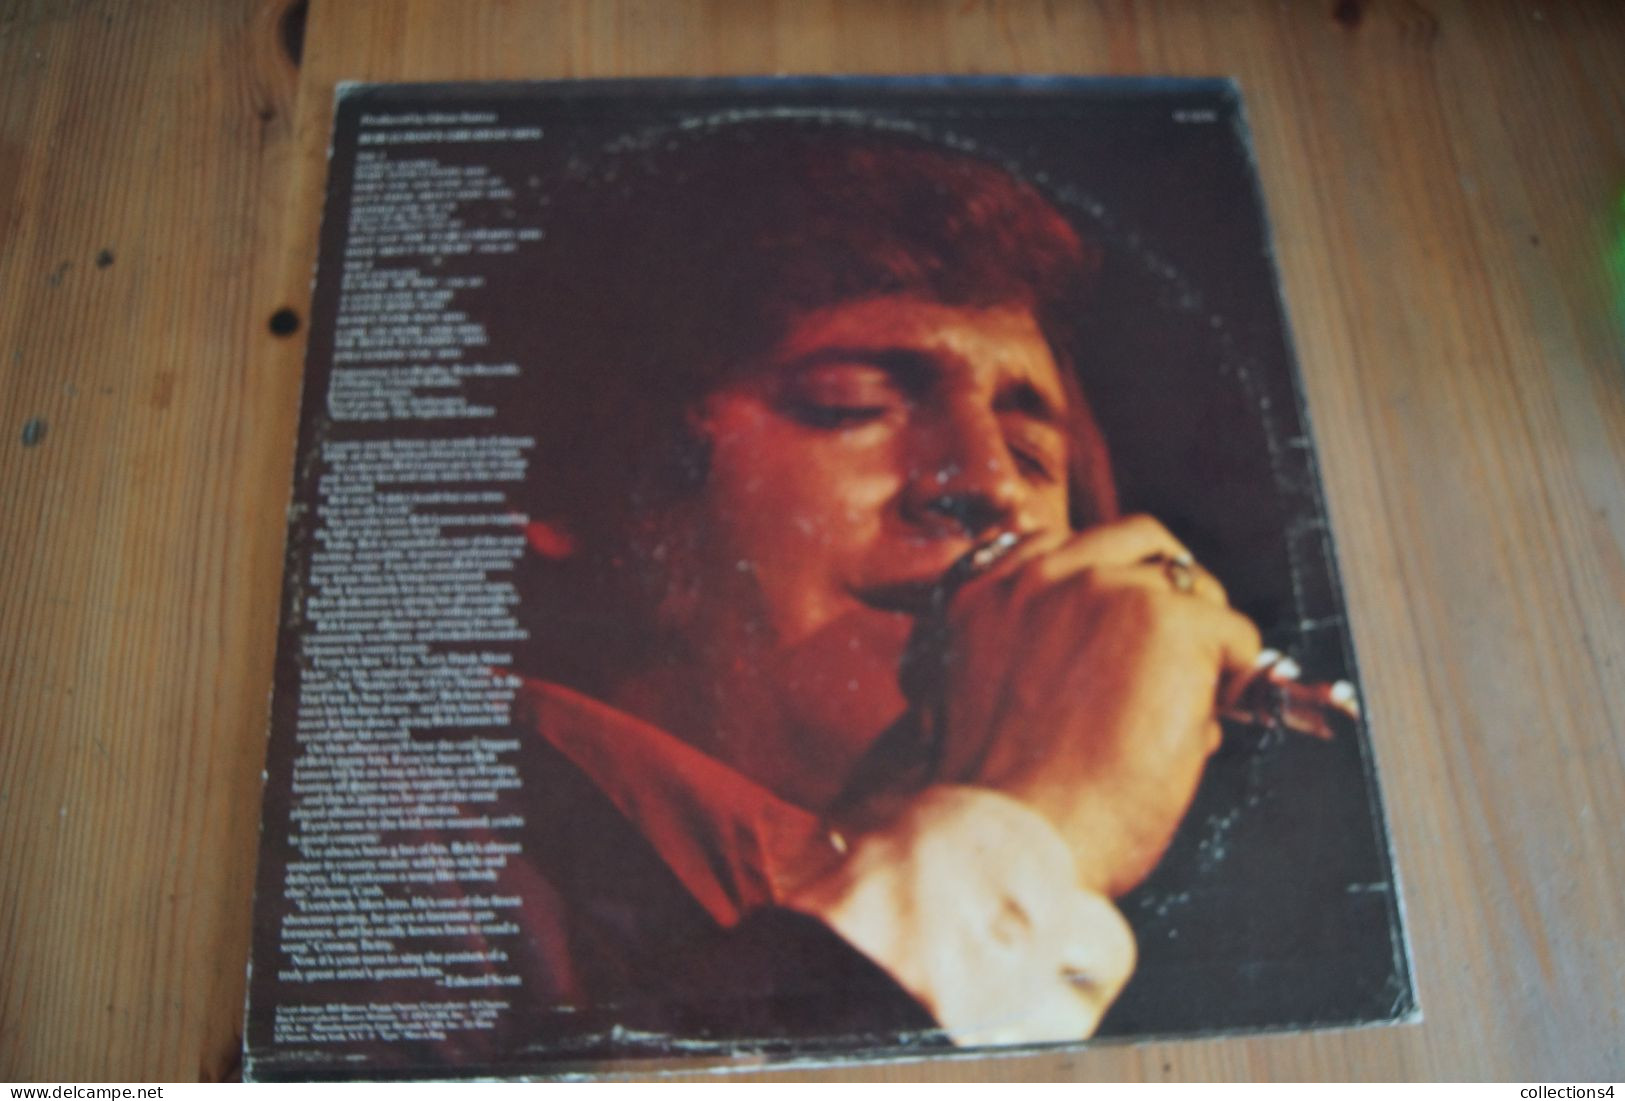 BOB LUMAN GREATEST HITS LP AMERICAIN 1974 COUNTRY - Country Et Folk